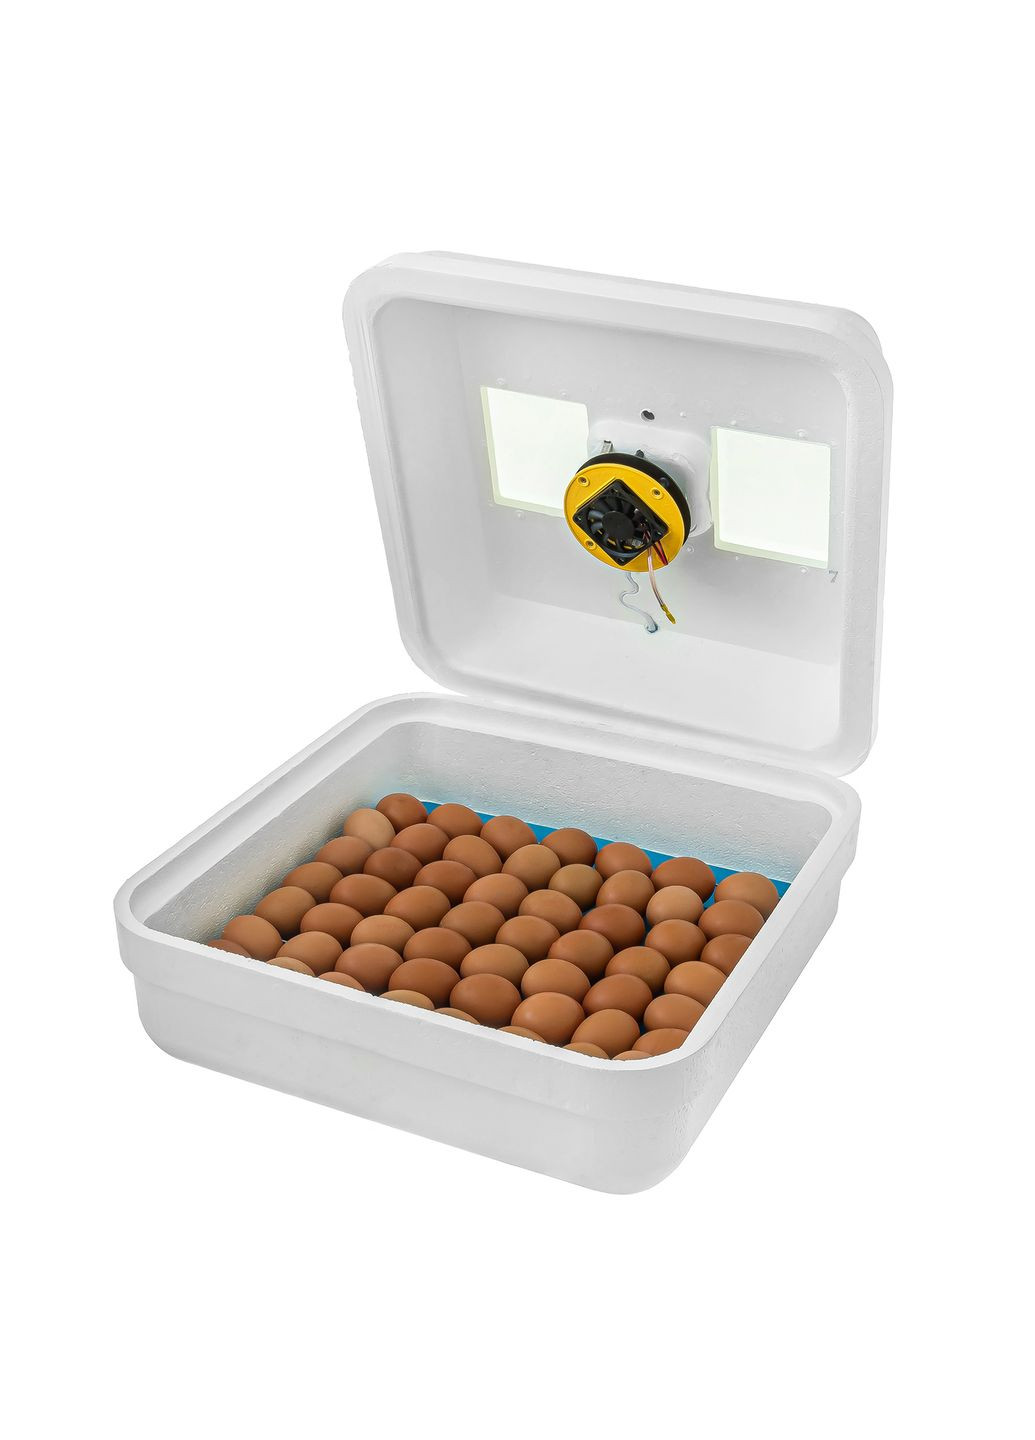 Инкубатор « Smart TURBO» на 70 яиц с керамическим нагревателем (цифровой терморегулятор, вентилятор) Рябушка (277169063)